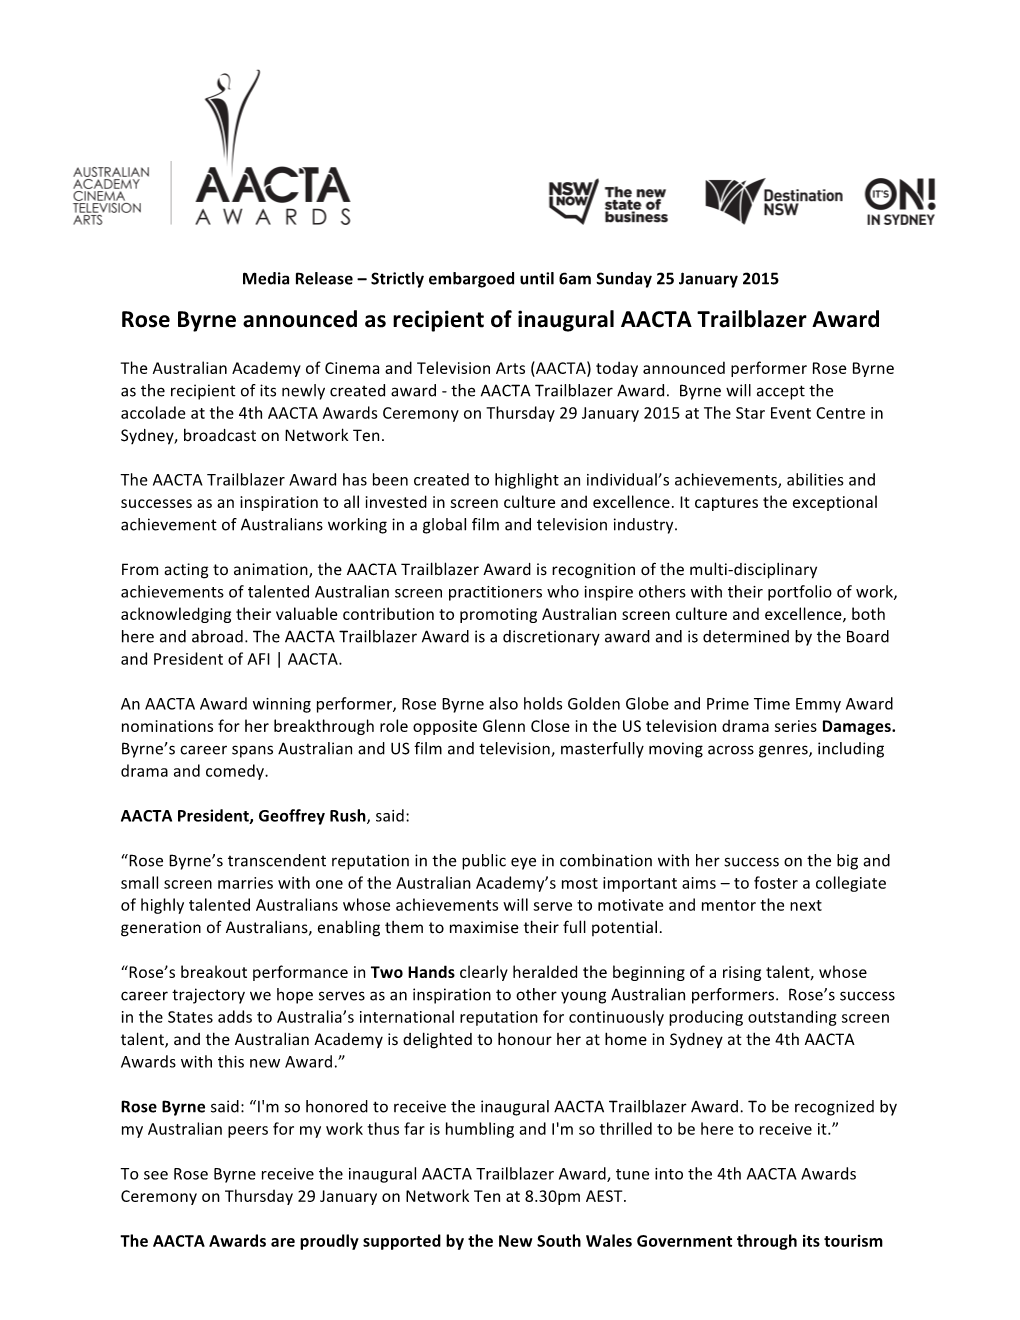 Rose Byrne Announced As Recipient of Inaugural AACTA Trailblazer Award